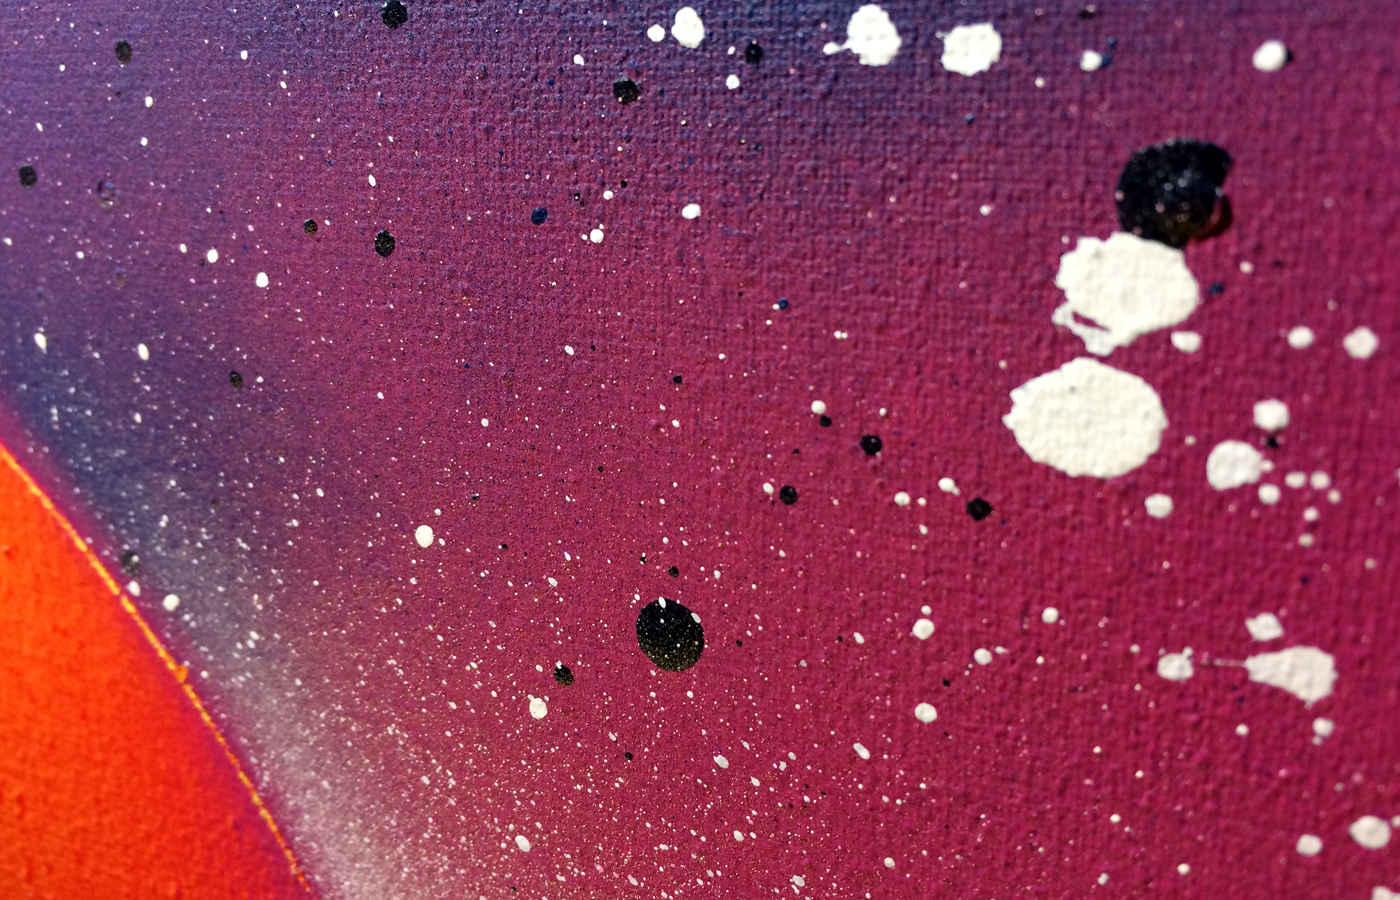 Space  spray paint art spraypaint art spray paint art planet Planets aerosol can canvas stars Sun universe cosmos